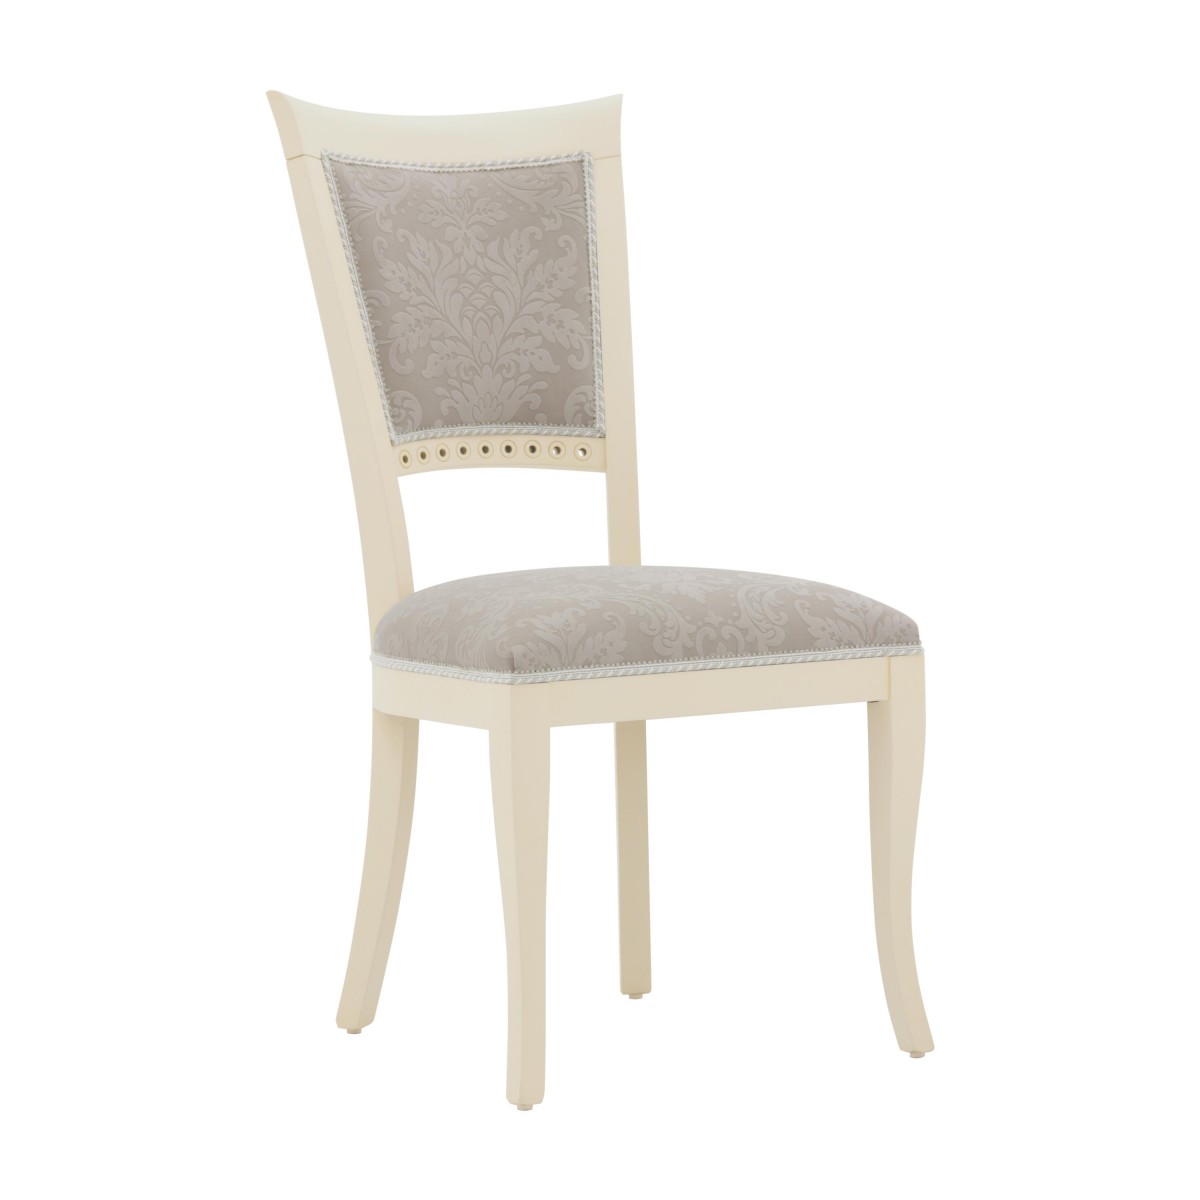 classic chair modigliani 3652